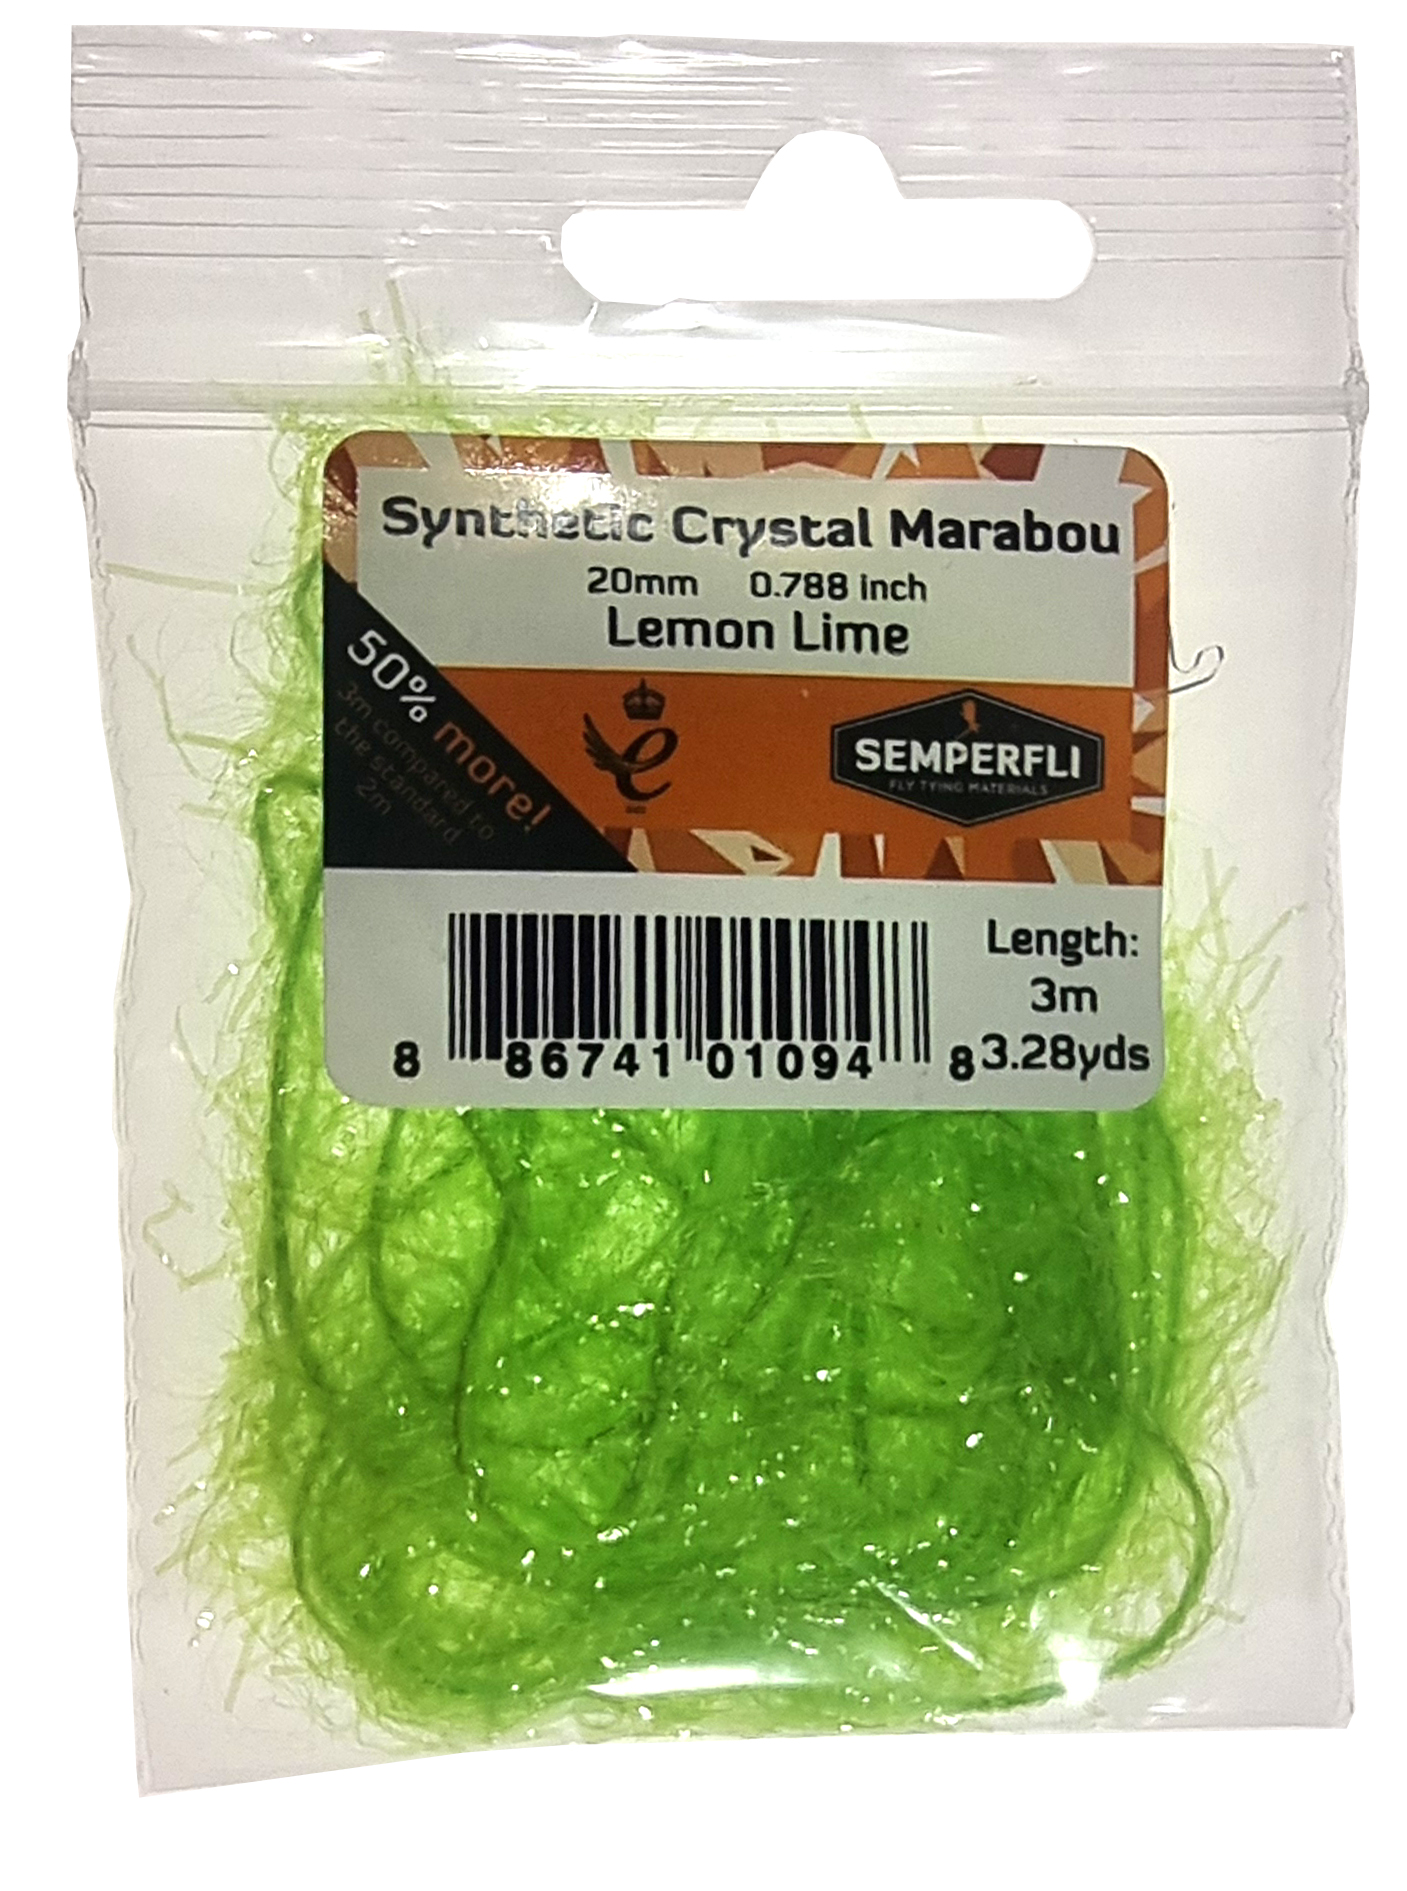 Semperfli Synthetic Crystal Marabou 20mm Lemon Lime